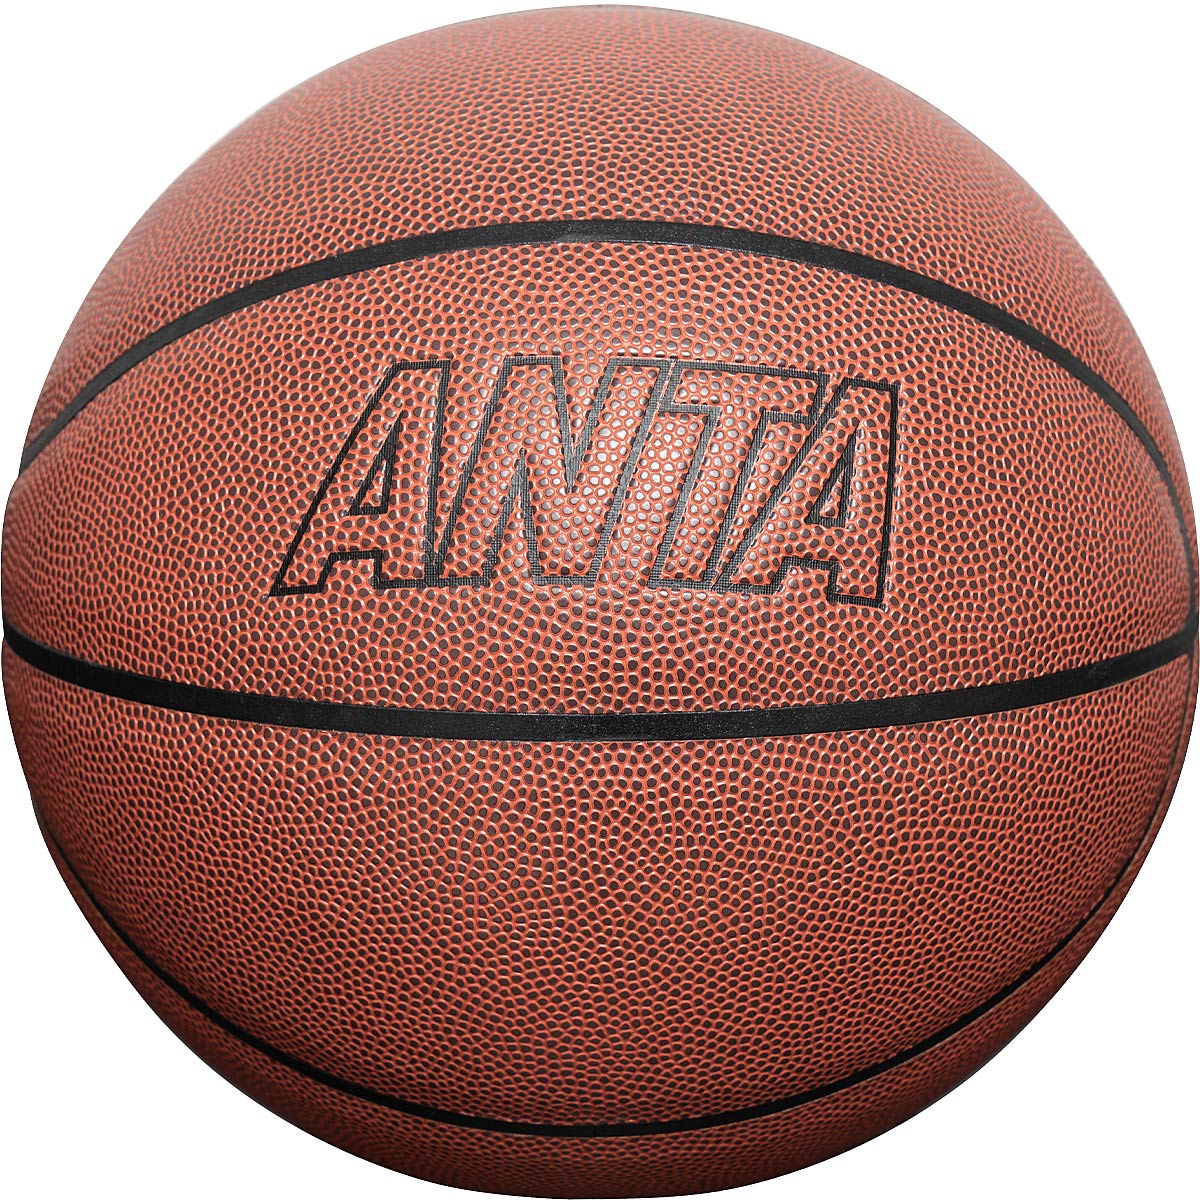 Image of Anta Basketball, Brown